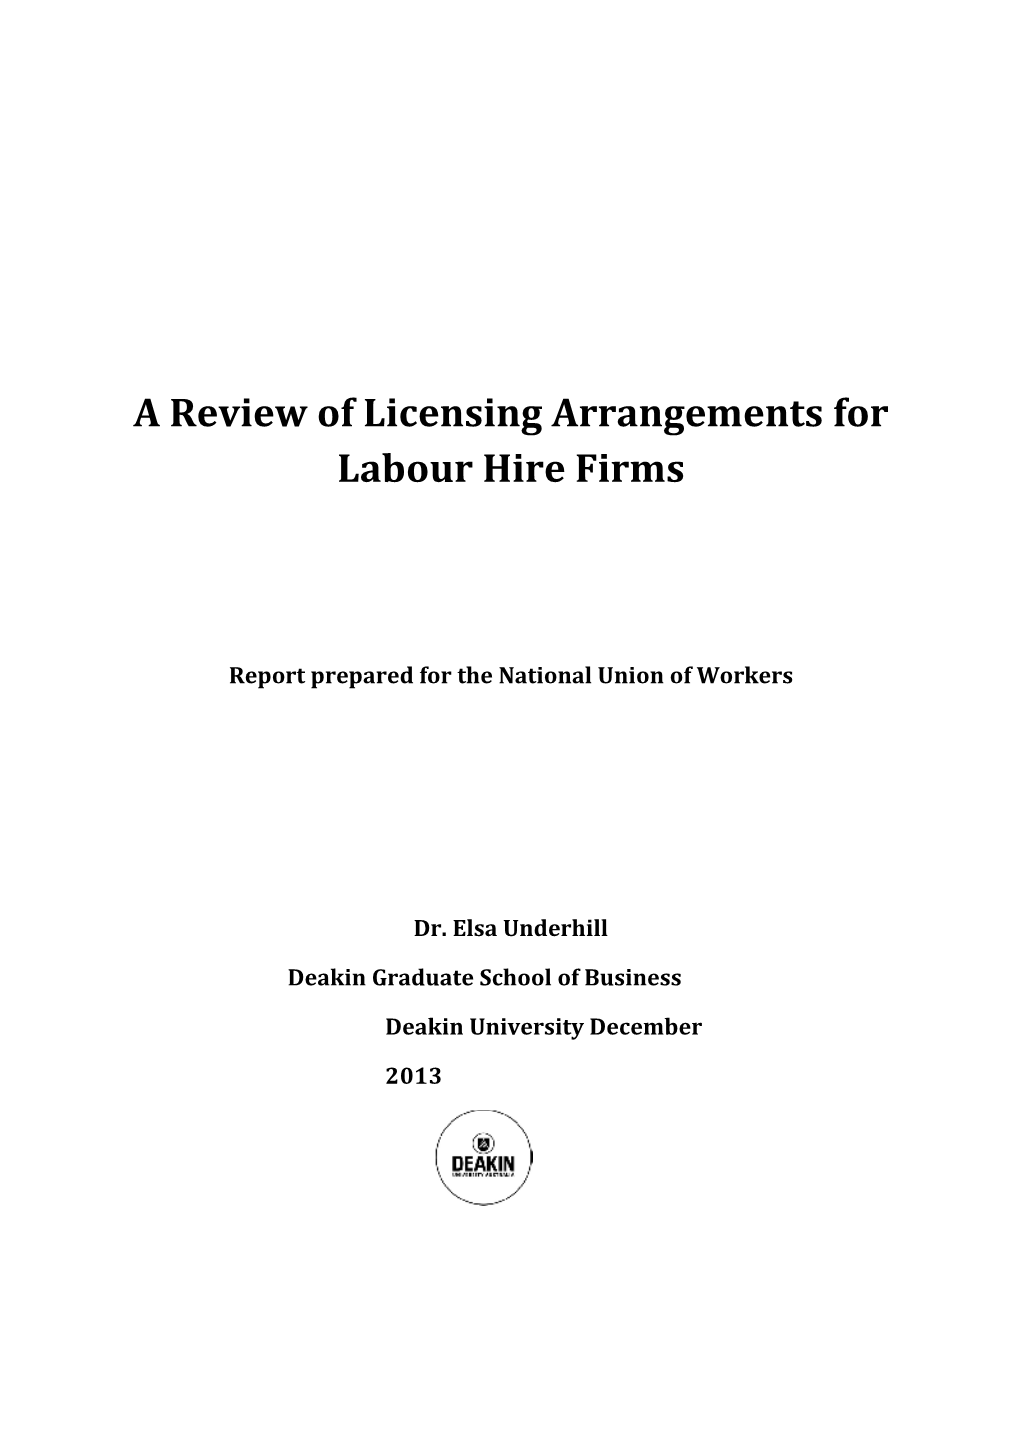 Underhill Report On Licensing Arrangements